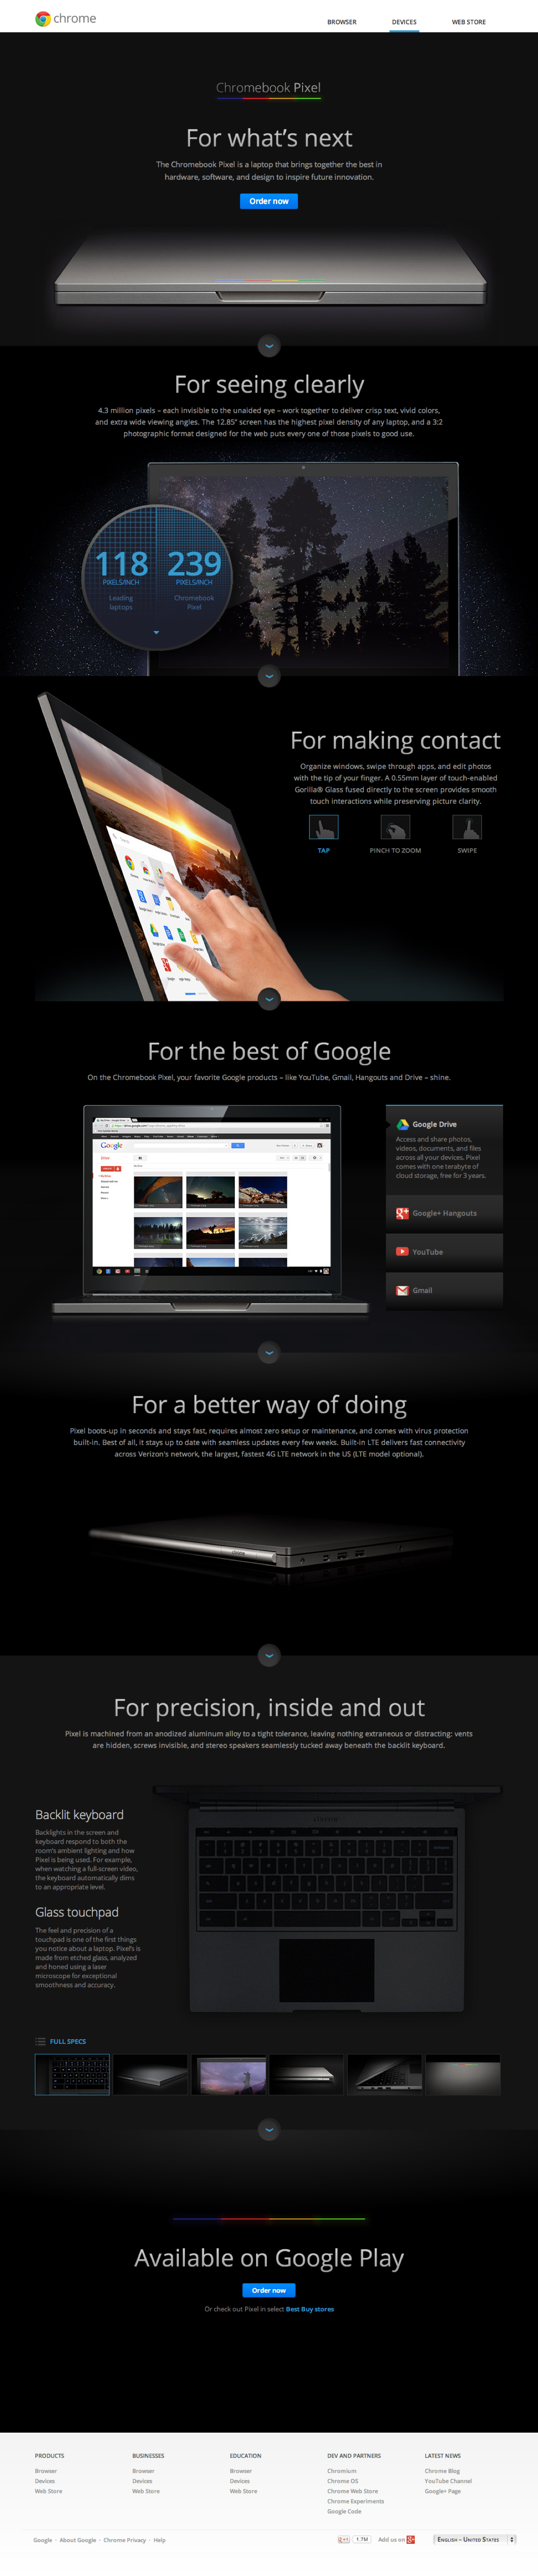 Google Chromebook Pixel.png